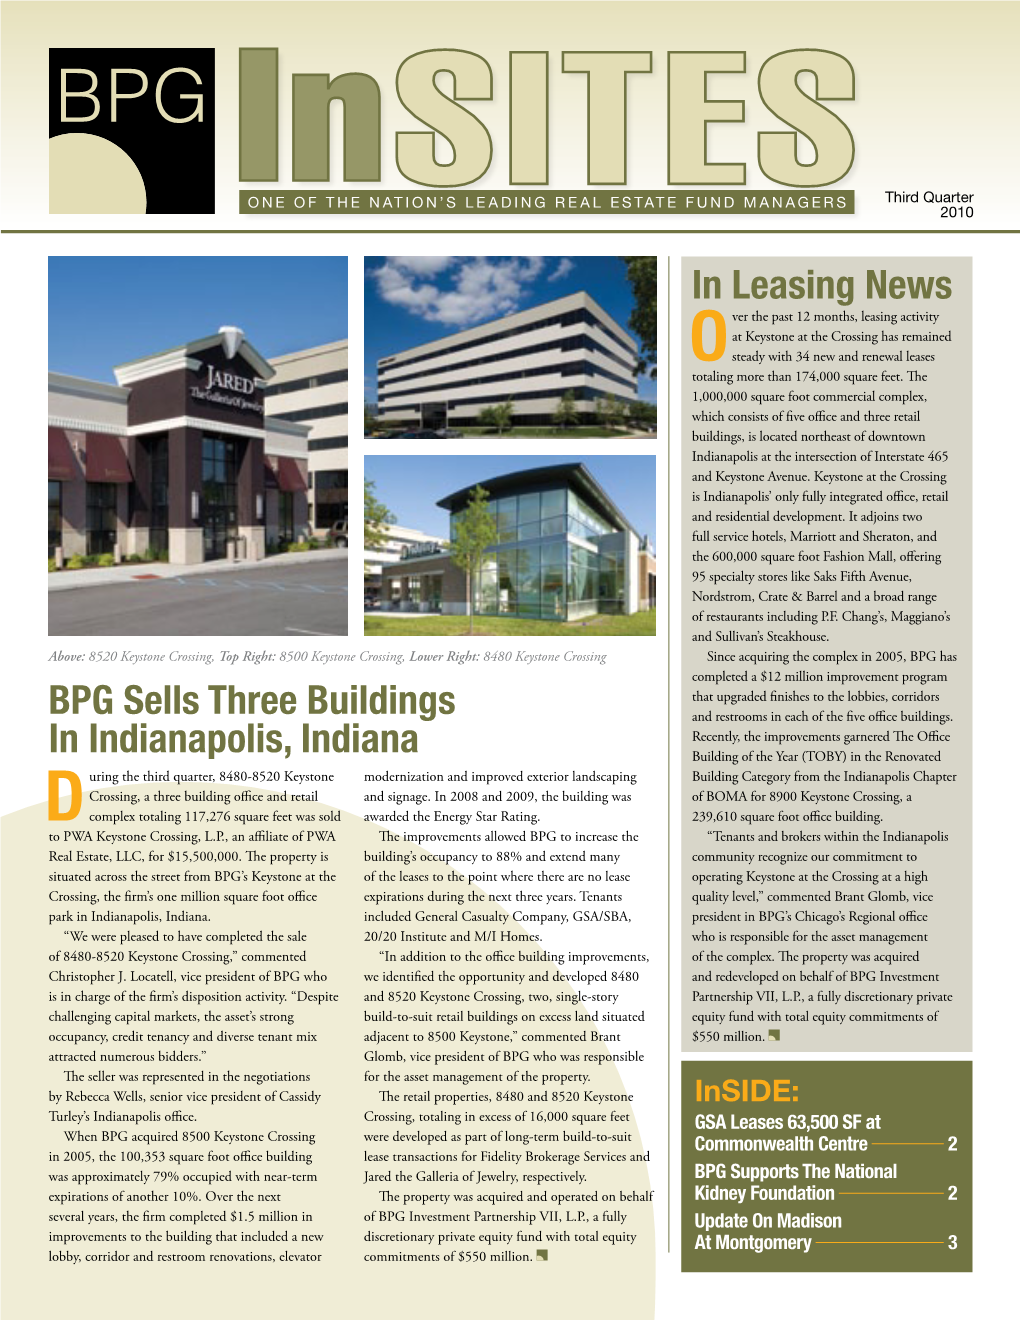 BPG Sells Three Buildings in Indianapolis, Indiana in Leasing